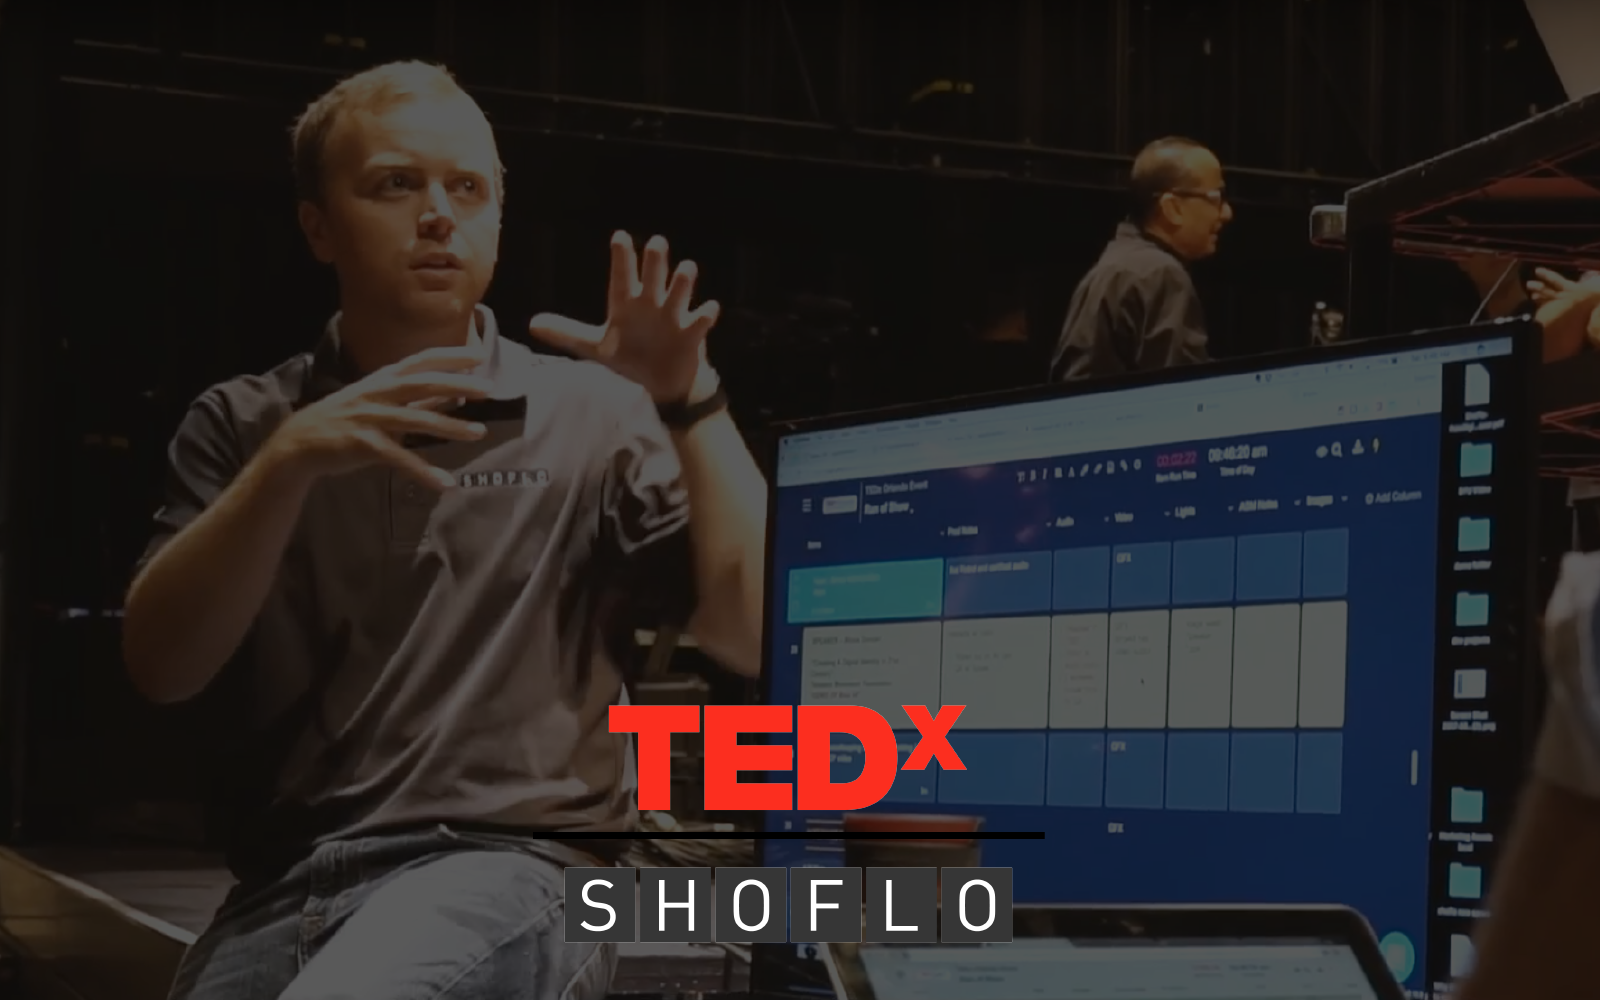 Tedx using shoflo event production software